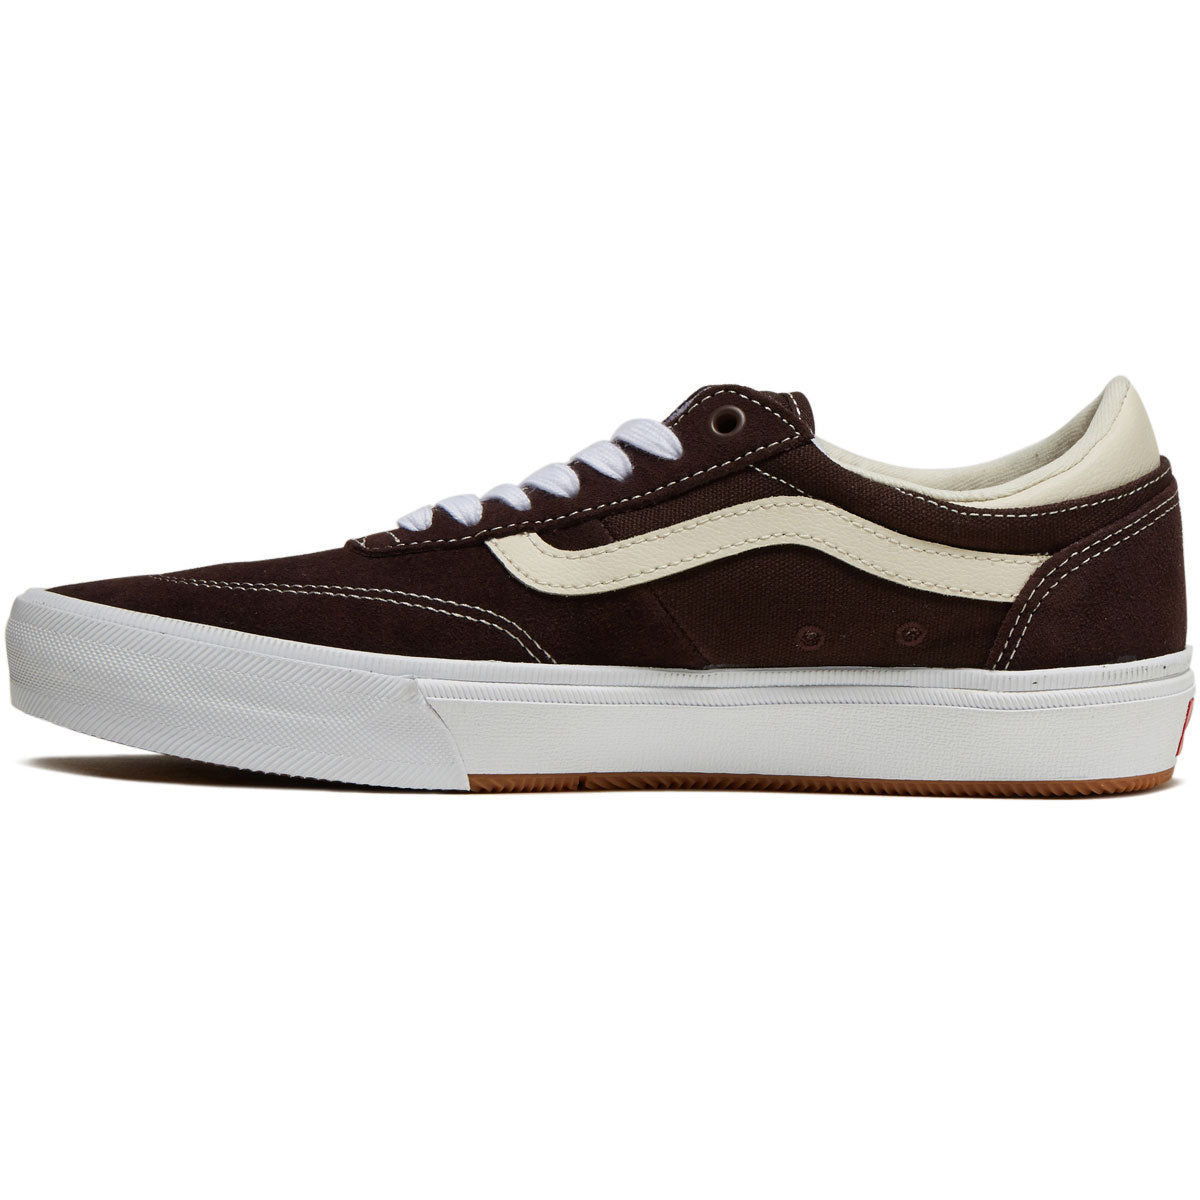 Vans Gilbert Crockett Shoes - Dark Brown image 2